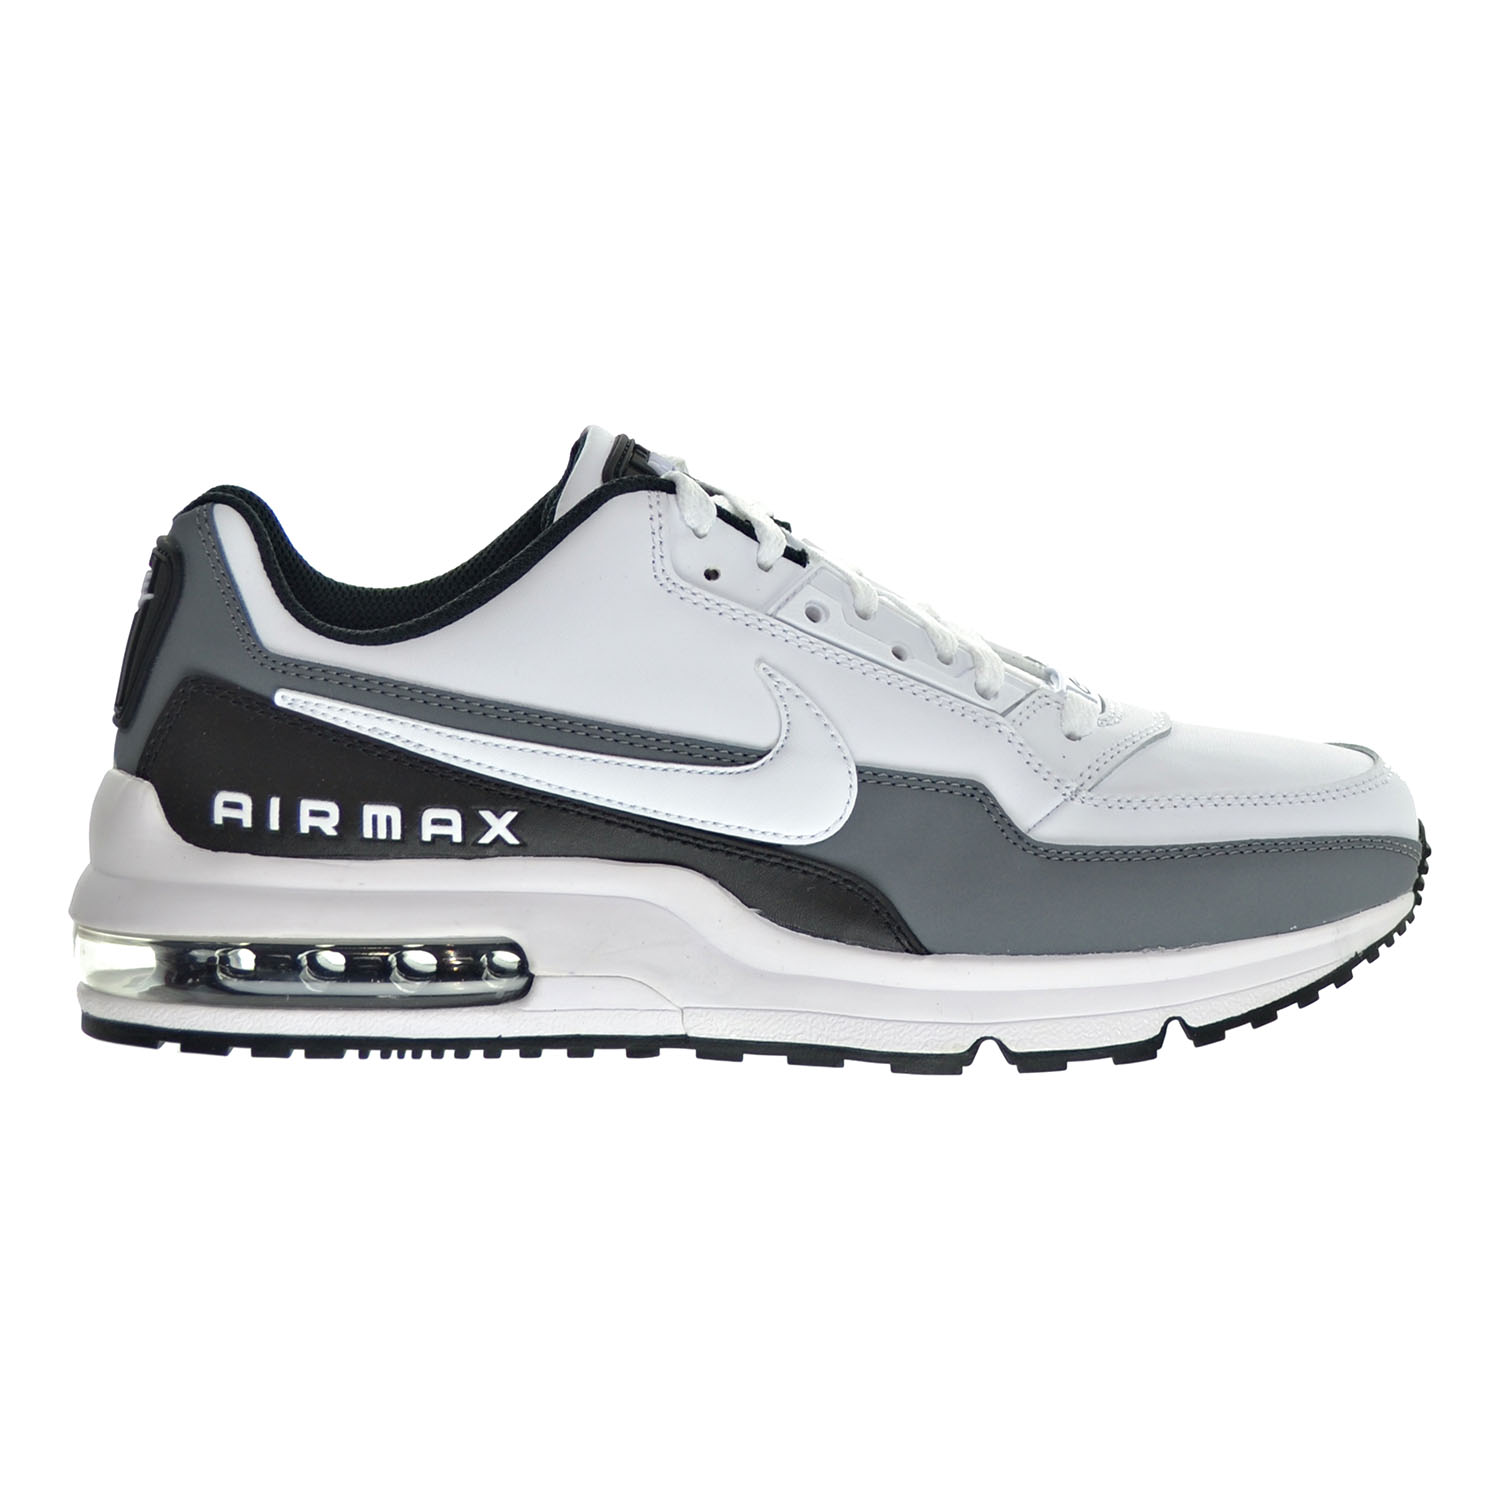 Nike Air Max LTD 3 Men's Shoes White/Black/Cool Grey 687977-105 | eBay